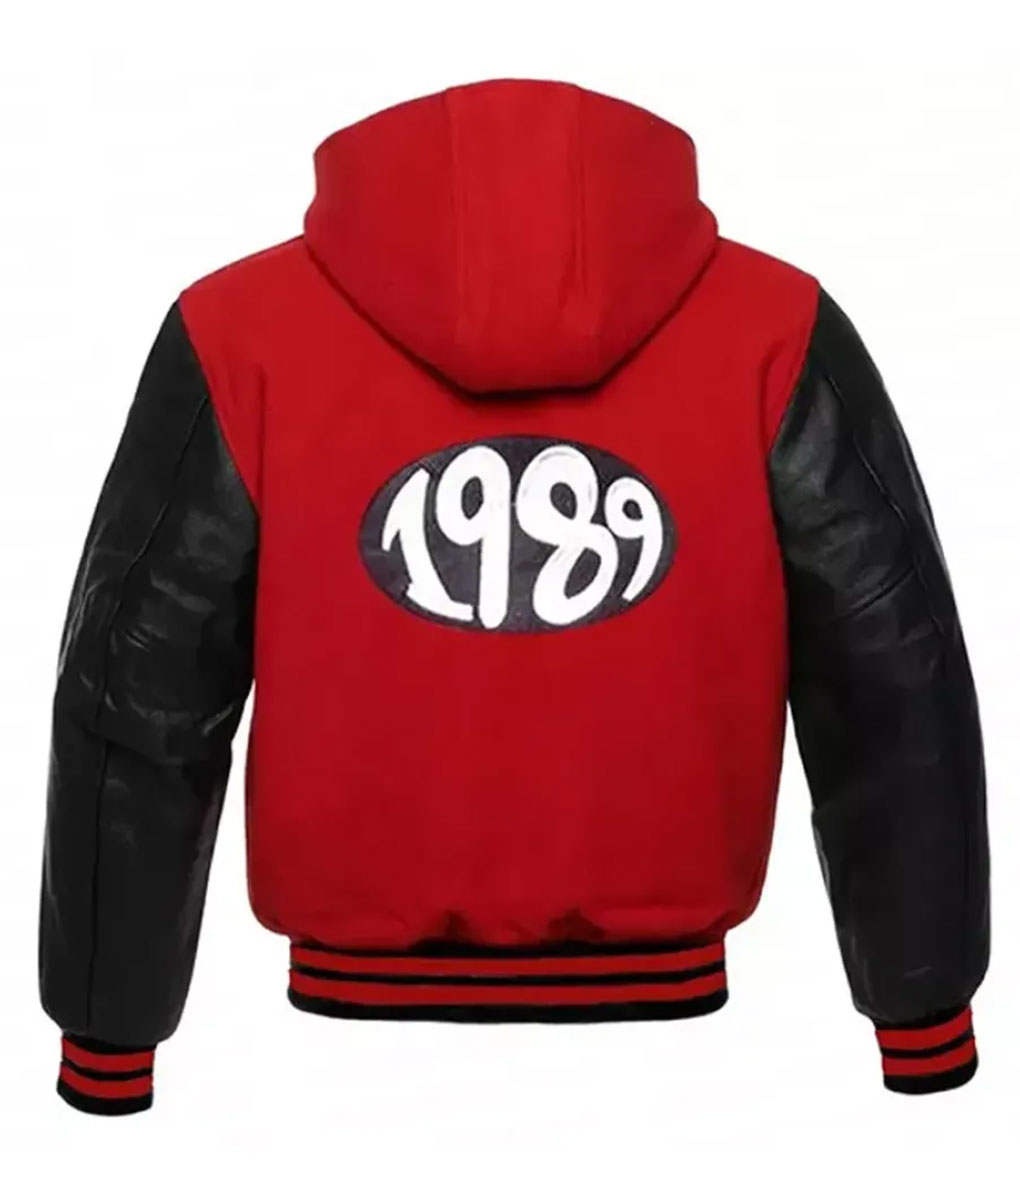 Taylor Swift 1989 Red Varsity Hooded Jacket (4)